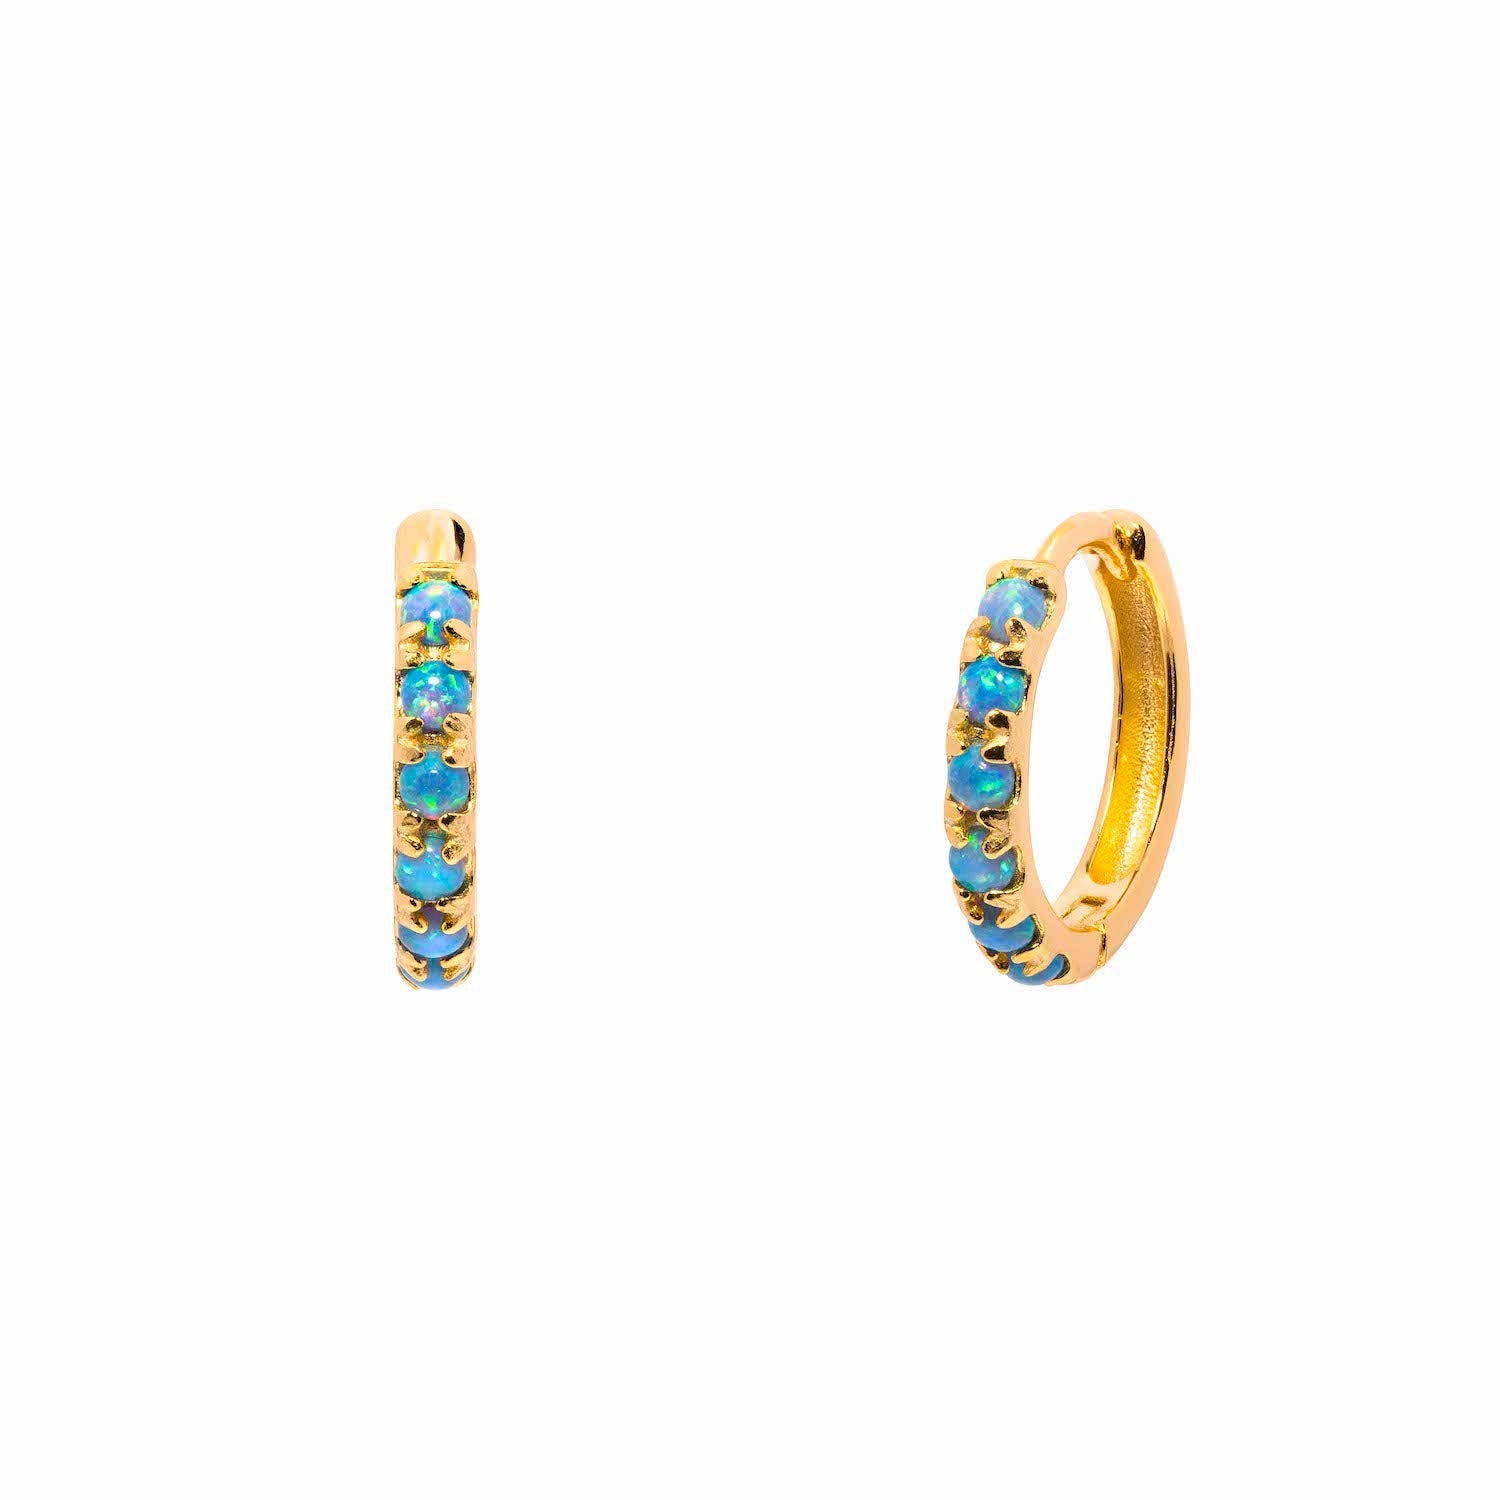 Duo Jewellery Earrings Yellow Gold / Medium Opalite Small Hoop Earrings